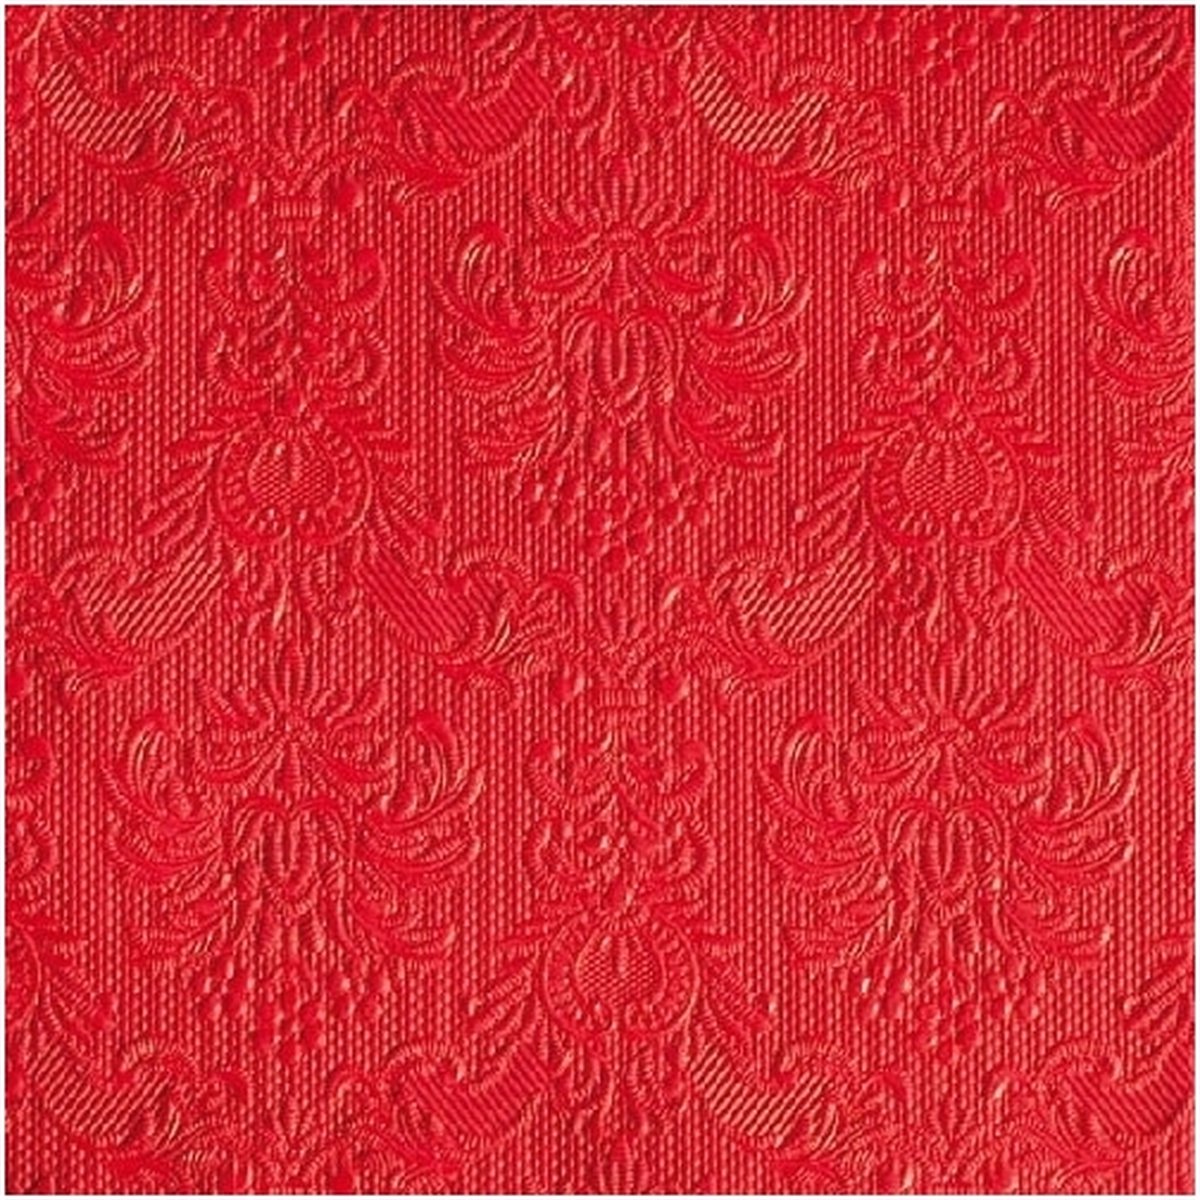 60x stuks servetten rood barok stijl 3-laags - elegance - barok patroon - Feest artikelen - feest decoraties